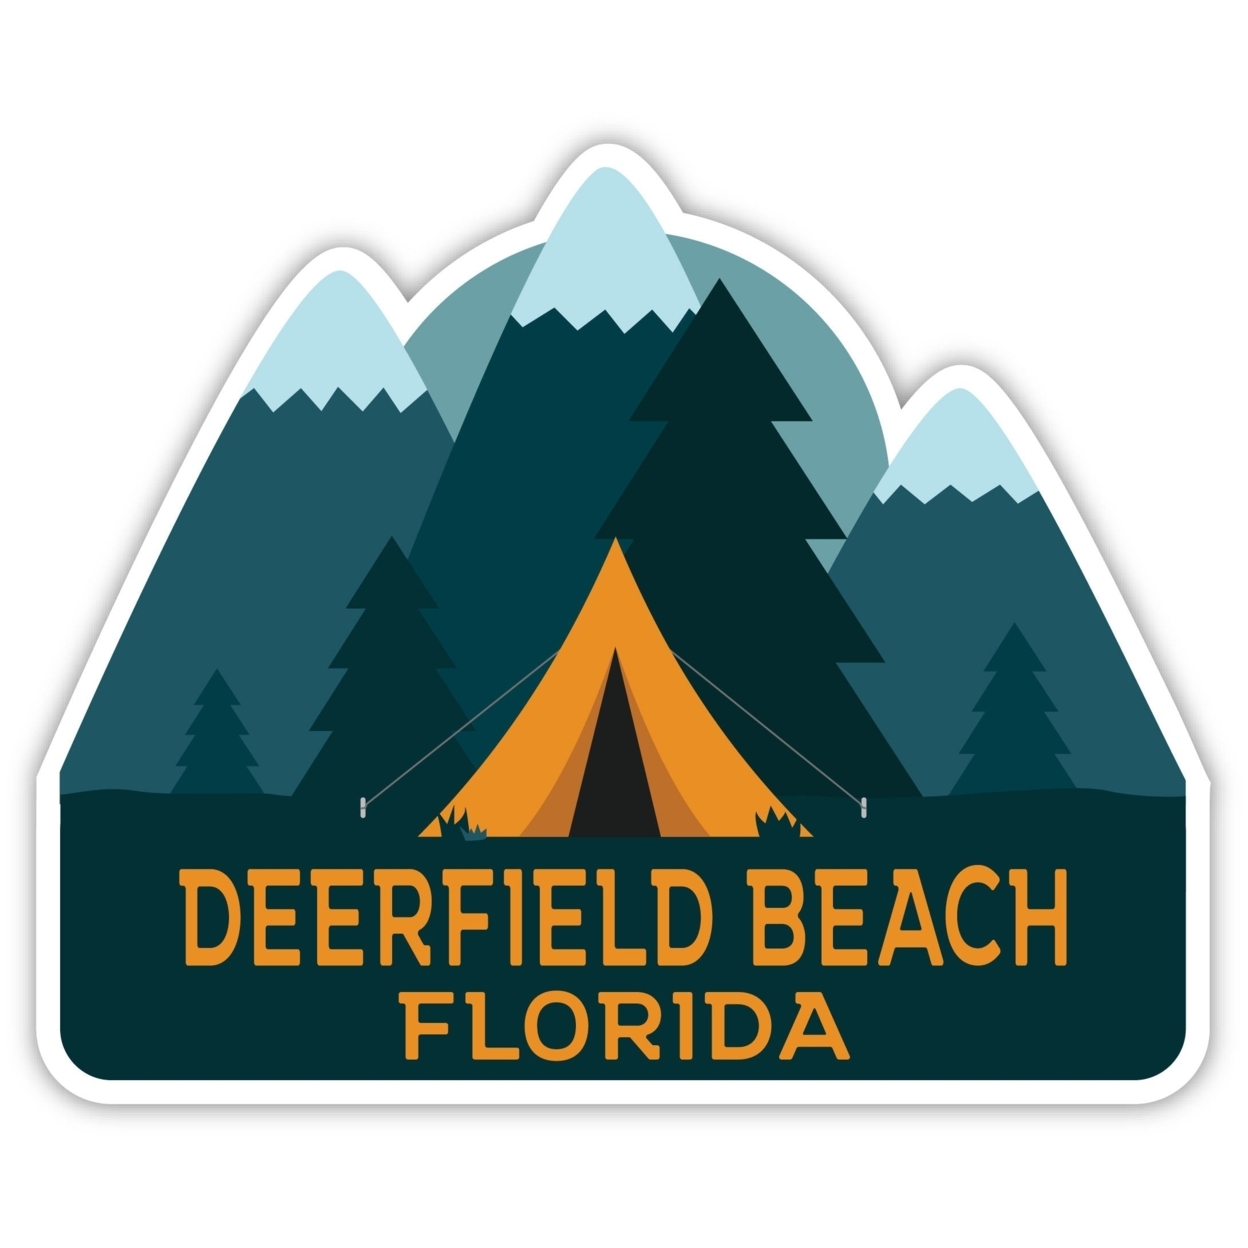 Deerfield Beach Florida Souvenir Decorative Stickers (Choose Theme And Size) - Single Unit, 4-Inch, Tent